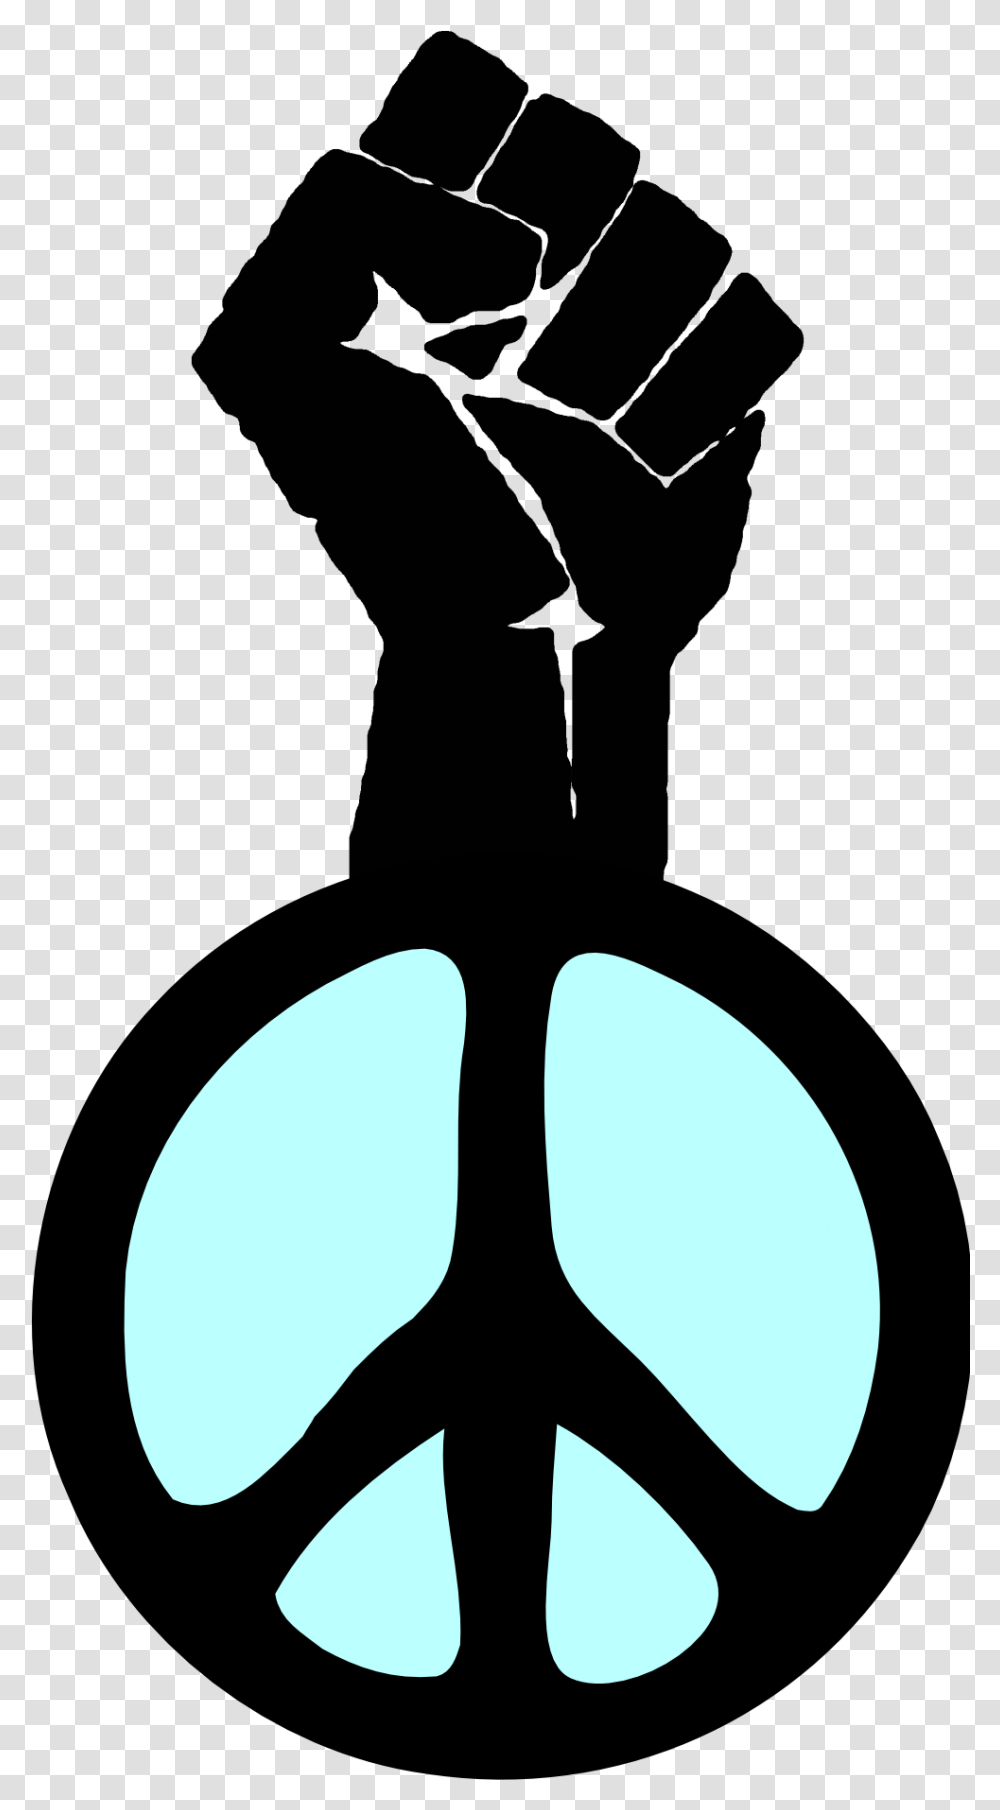 Black Power Fist Peace Sign Cartoons Nat Turner's Rebellion Symbol, Label, Silhouette, Stencil Transparent Png